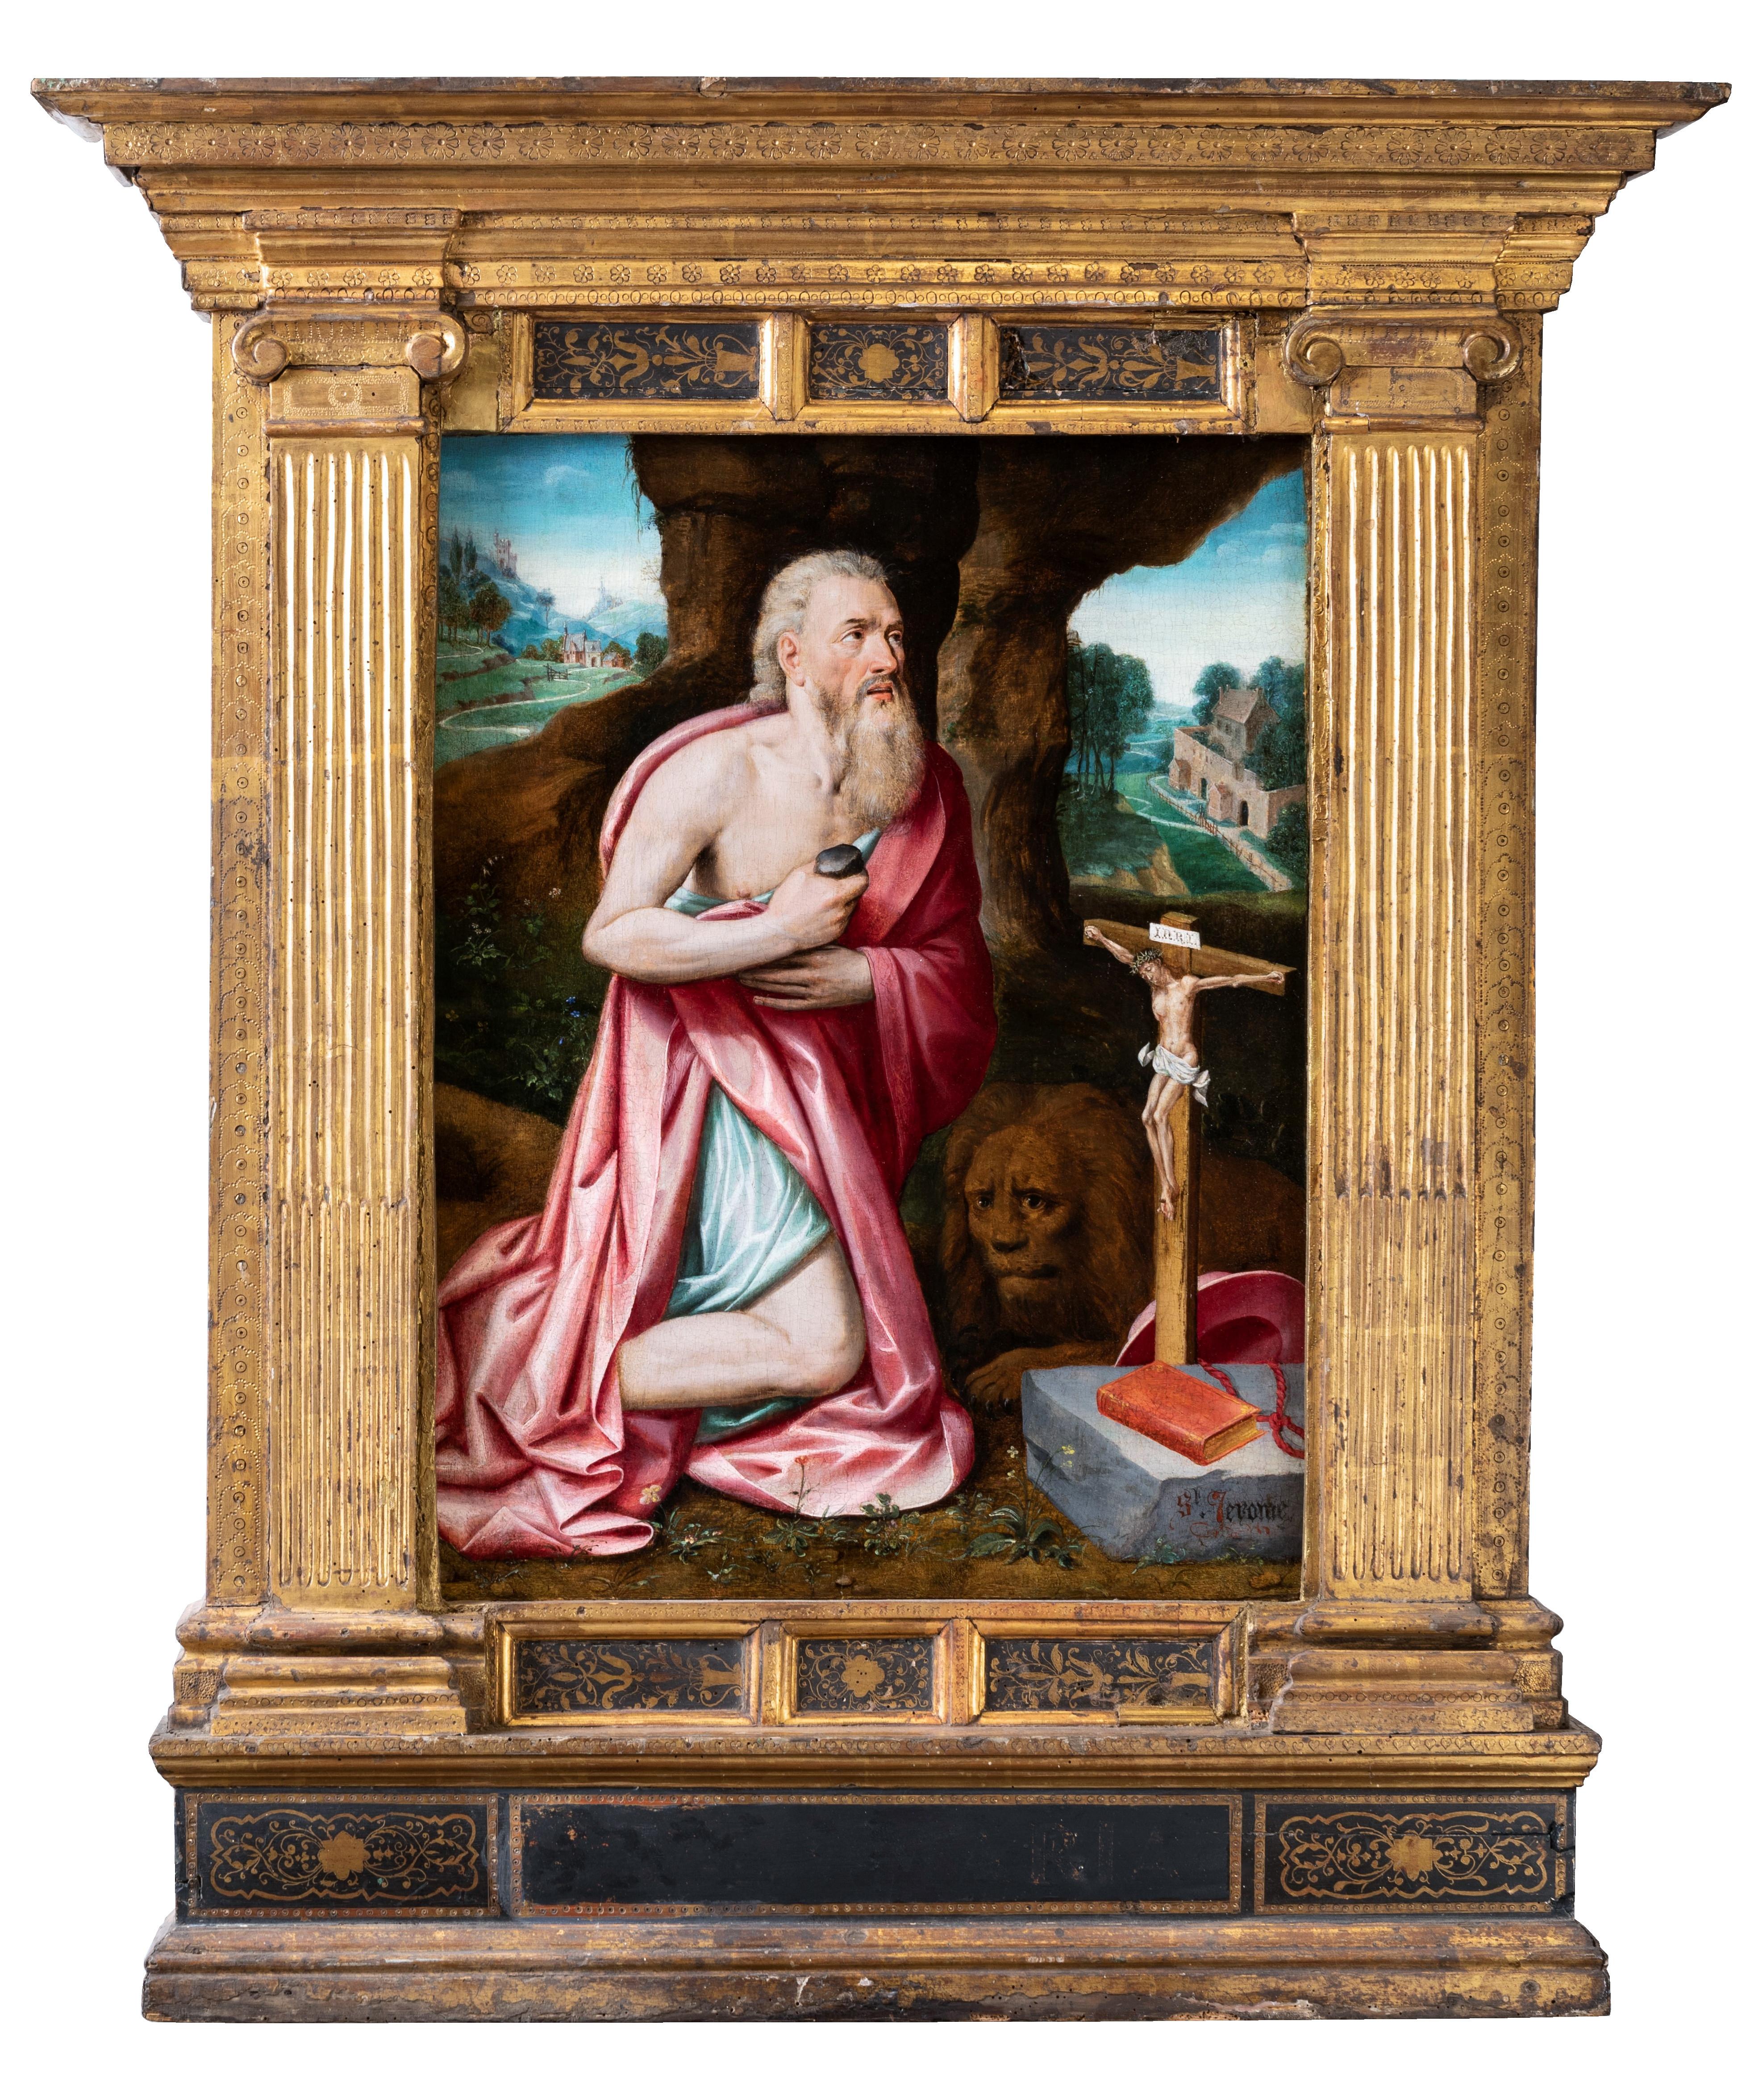 Saint Jerome in the desert
Cercle of Lambert Van Noort (1520-1571, Antwerp)
Antwerp School, mid-16th century
Oil on oak panel.
Dimensions: panel h. 69 cm (27.16 in), l. 52.5 cm (20.67 in)
With frame: h. 113 cm, l. 98 cm (44.49x38.58 in)
Very